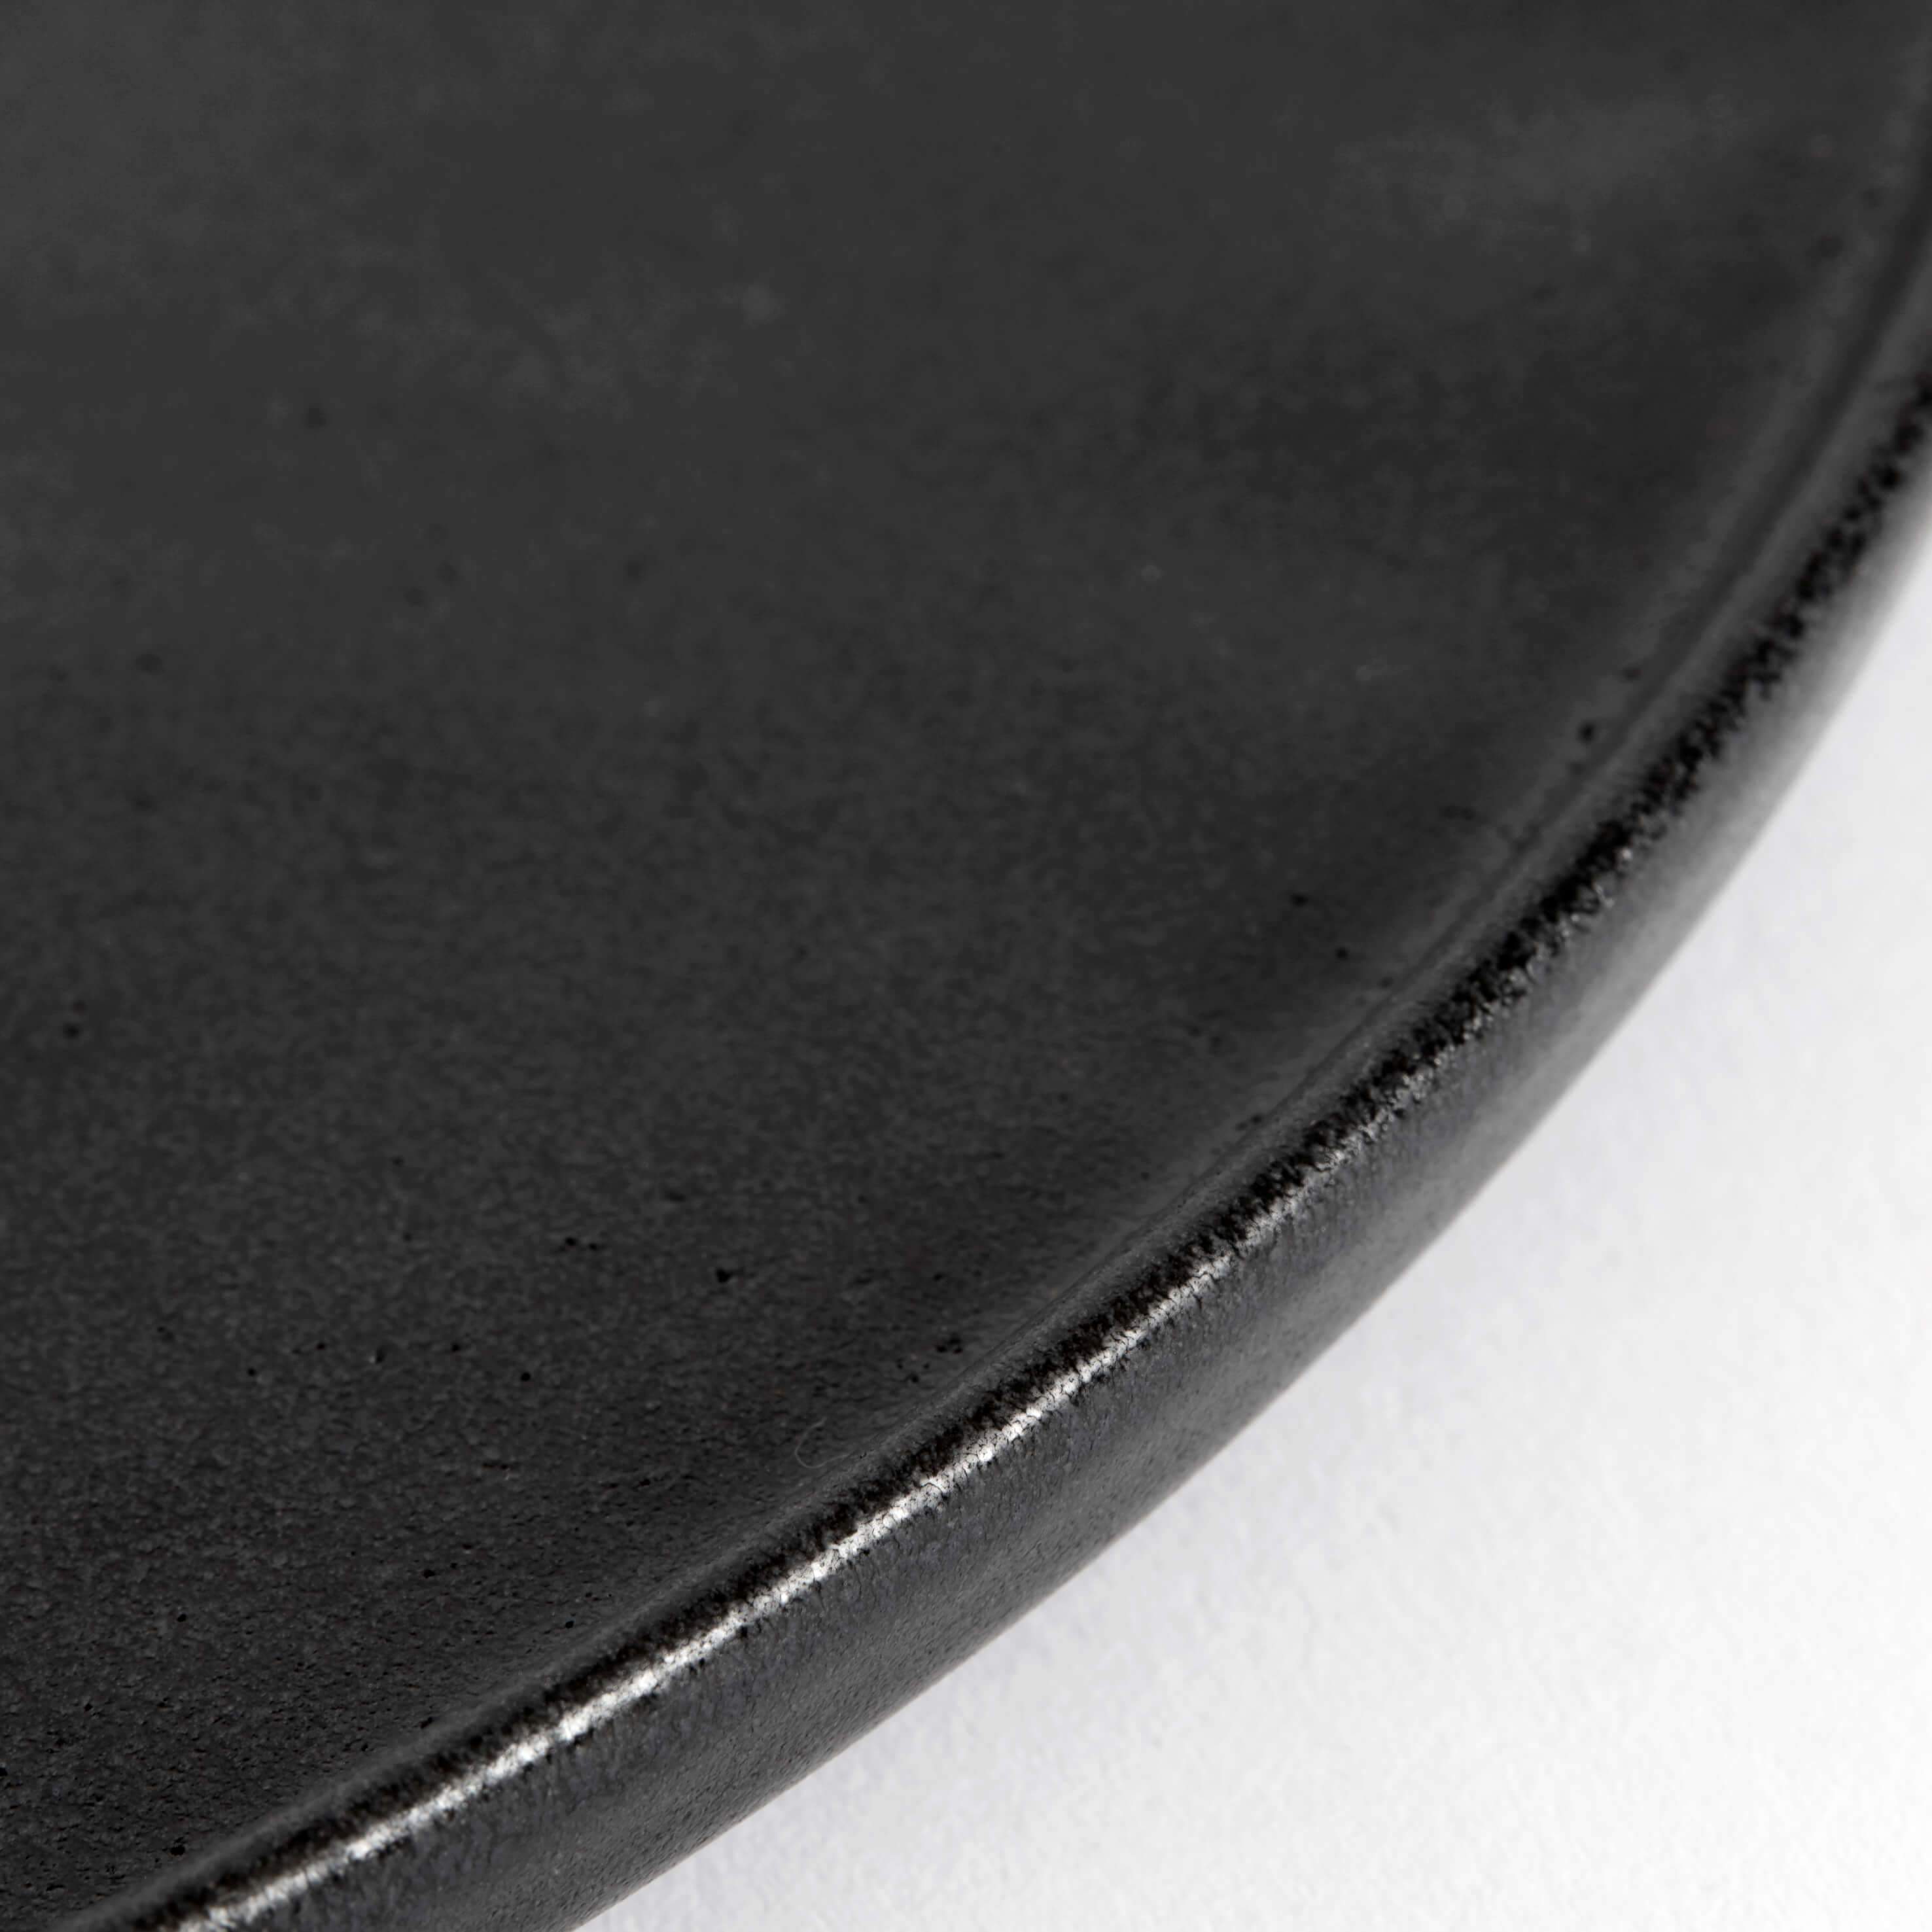 Muubs Ceto middagsplatta svart, 27,5 cm